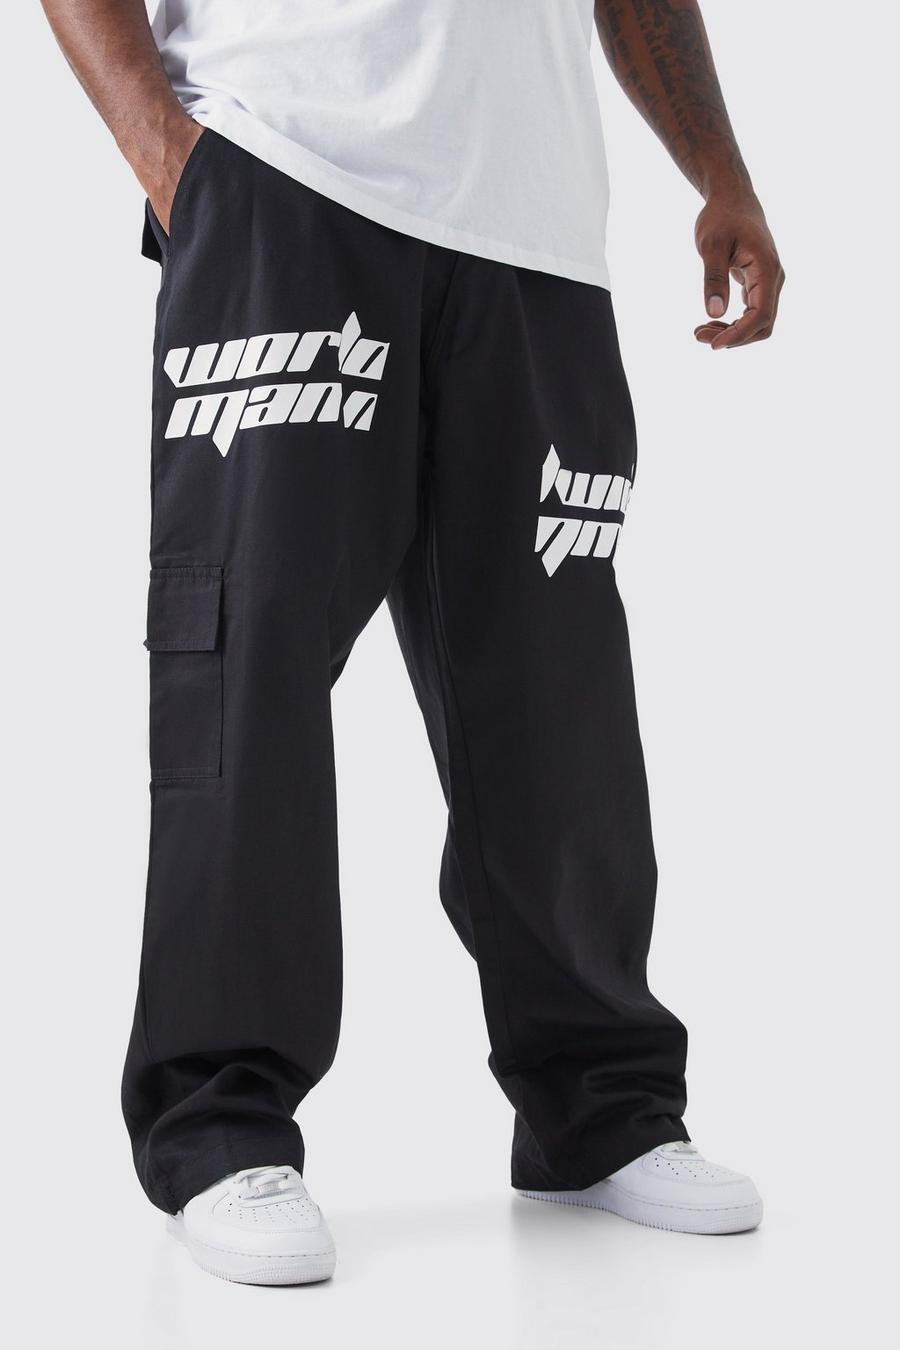 Pantalón Plus cargo holgado con estampado de texto dividido, Black negro